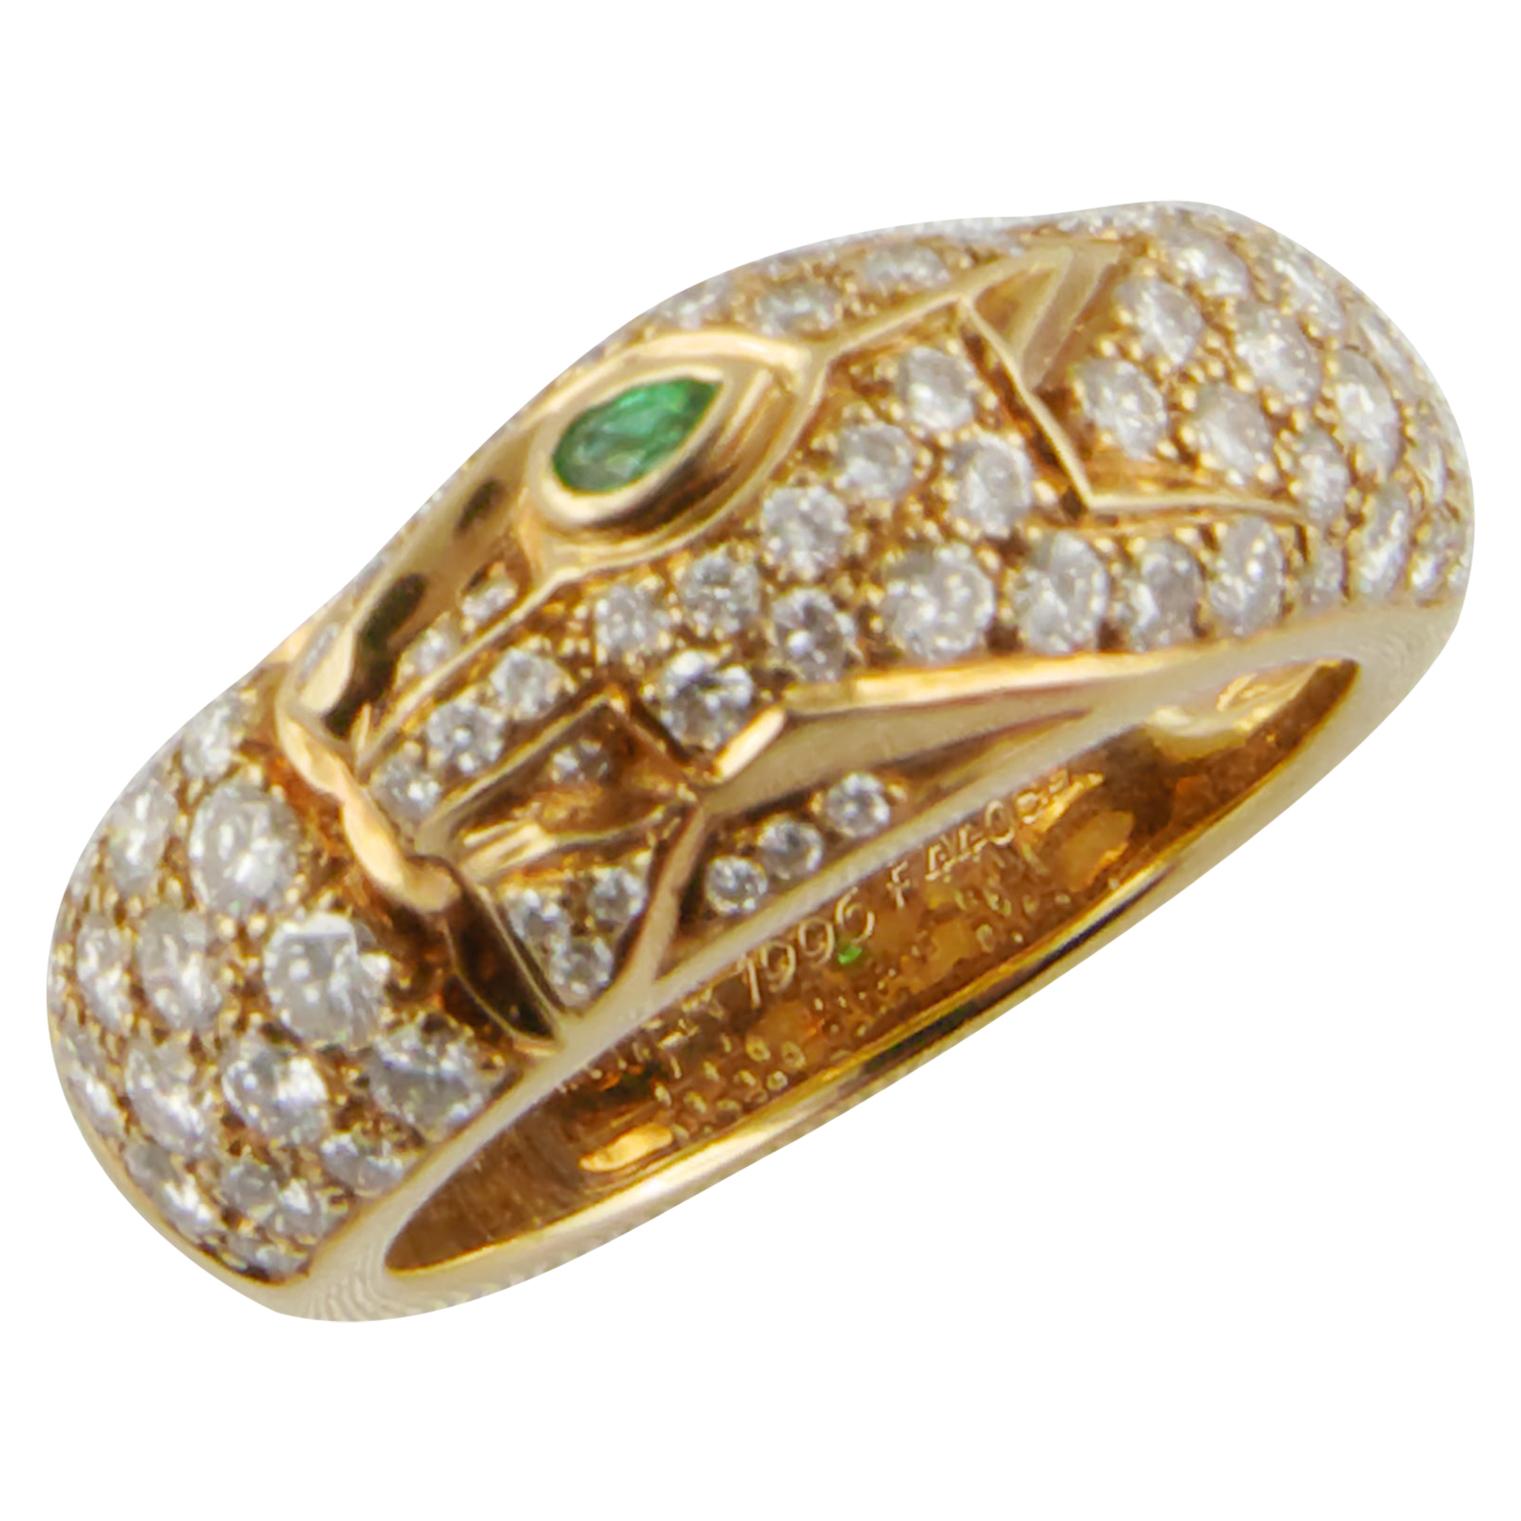 1990s Cartier Panthère Yellow Gold Diamond and Tsavorite Ring